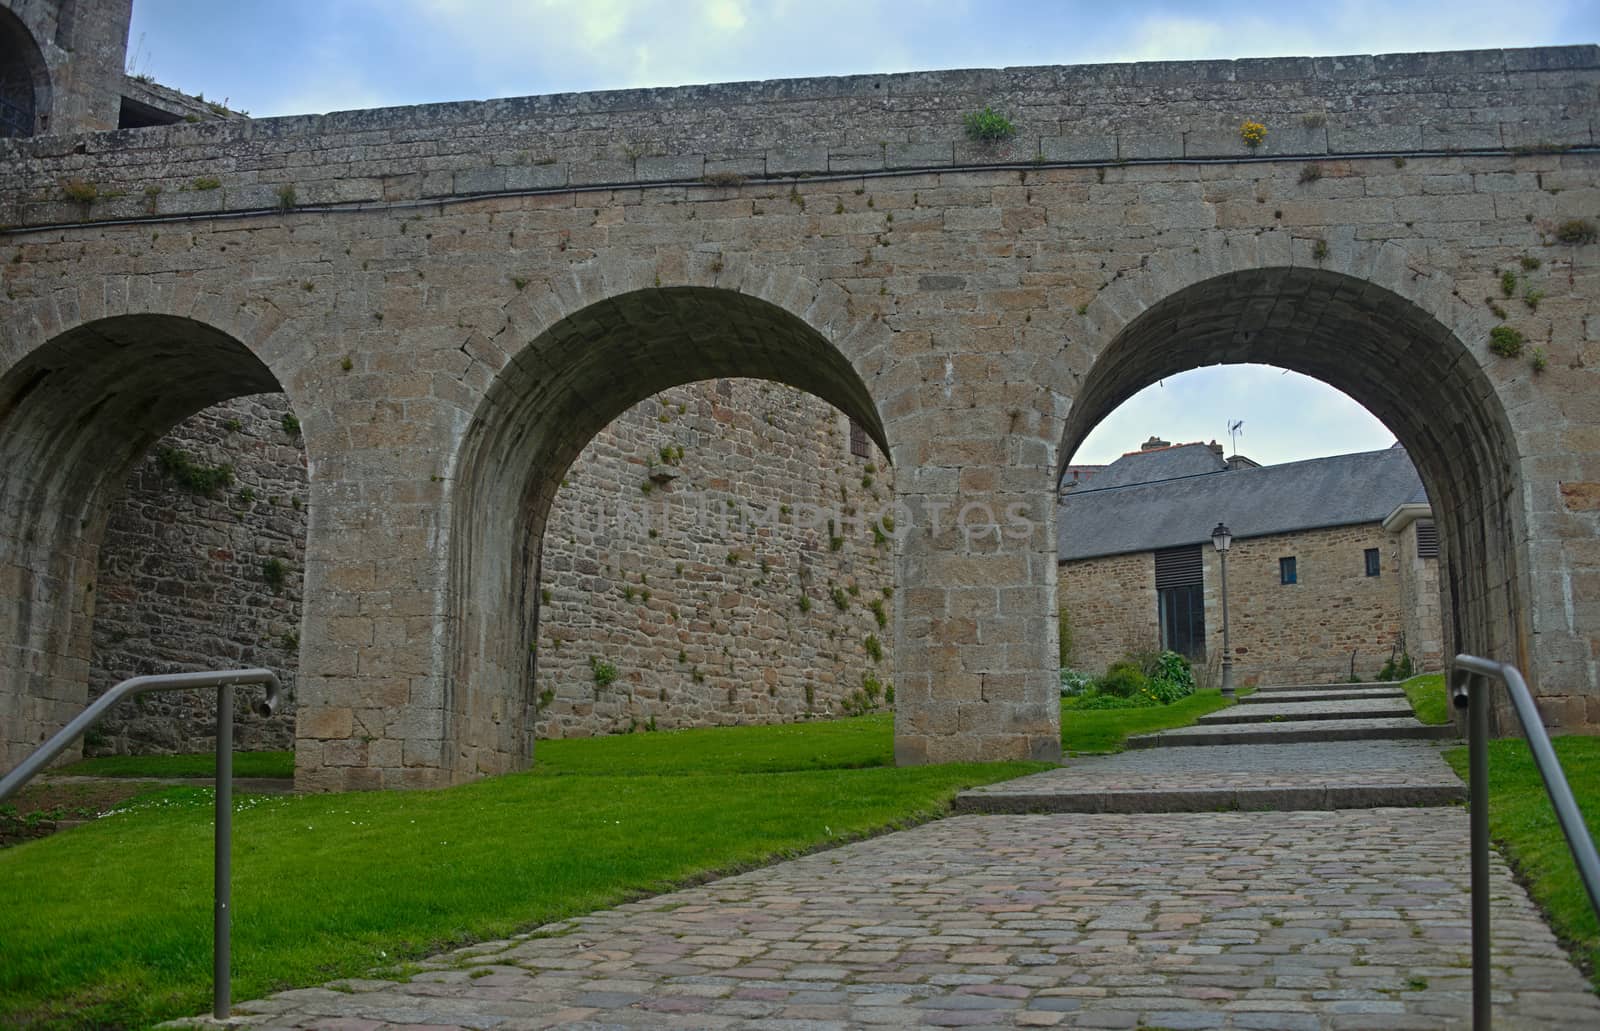 Big stone walls, gate and bridge at Dinan fortress, France by sheriffkule